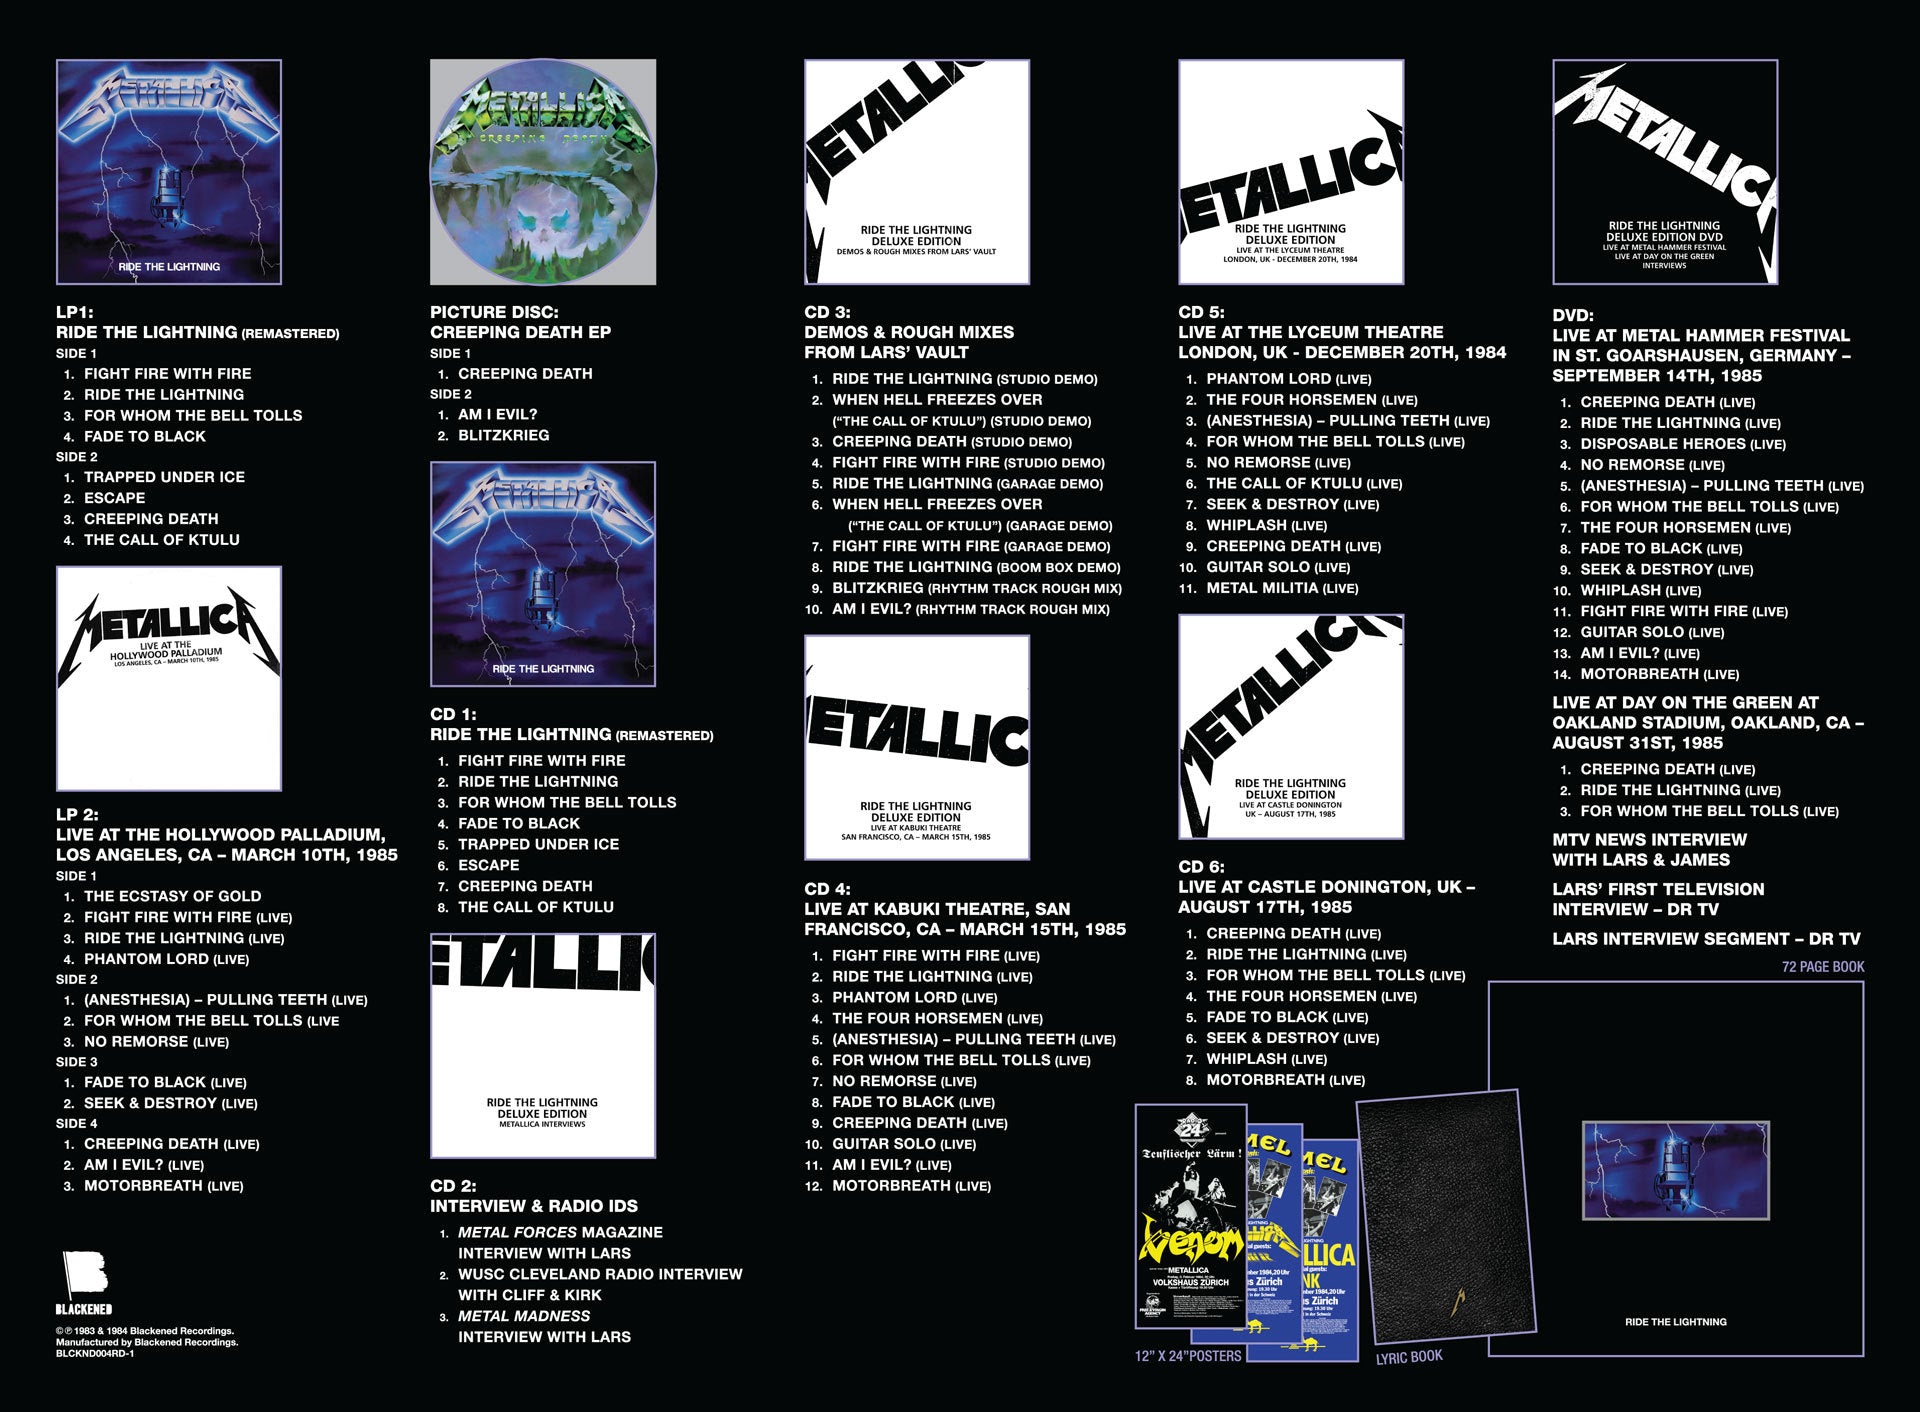 Metallica - Ride The Lightning (4LP/6CD/1DVD box set) - Vinyl - New